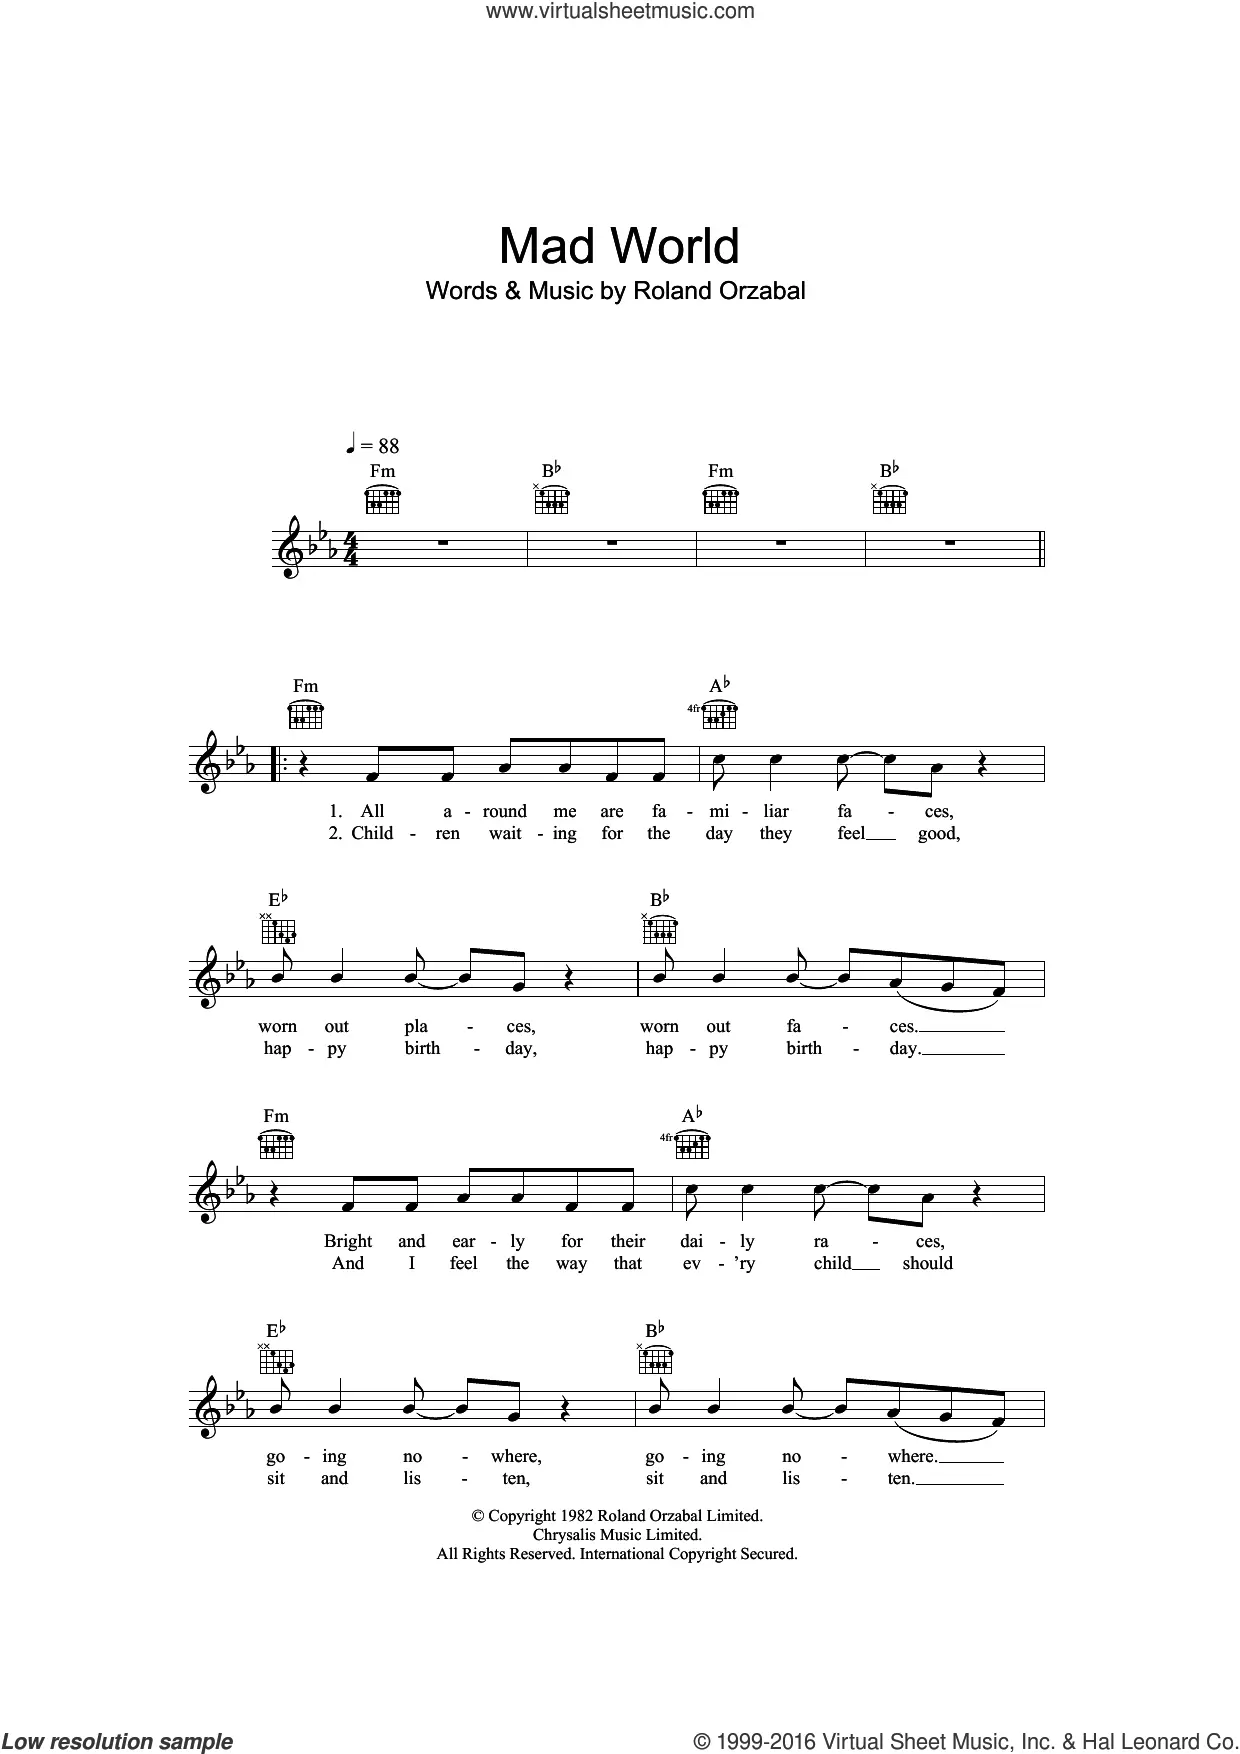 Mad World by Gary Jules Piano Sheet Music, Intermediate Level